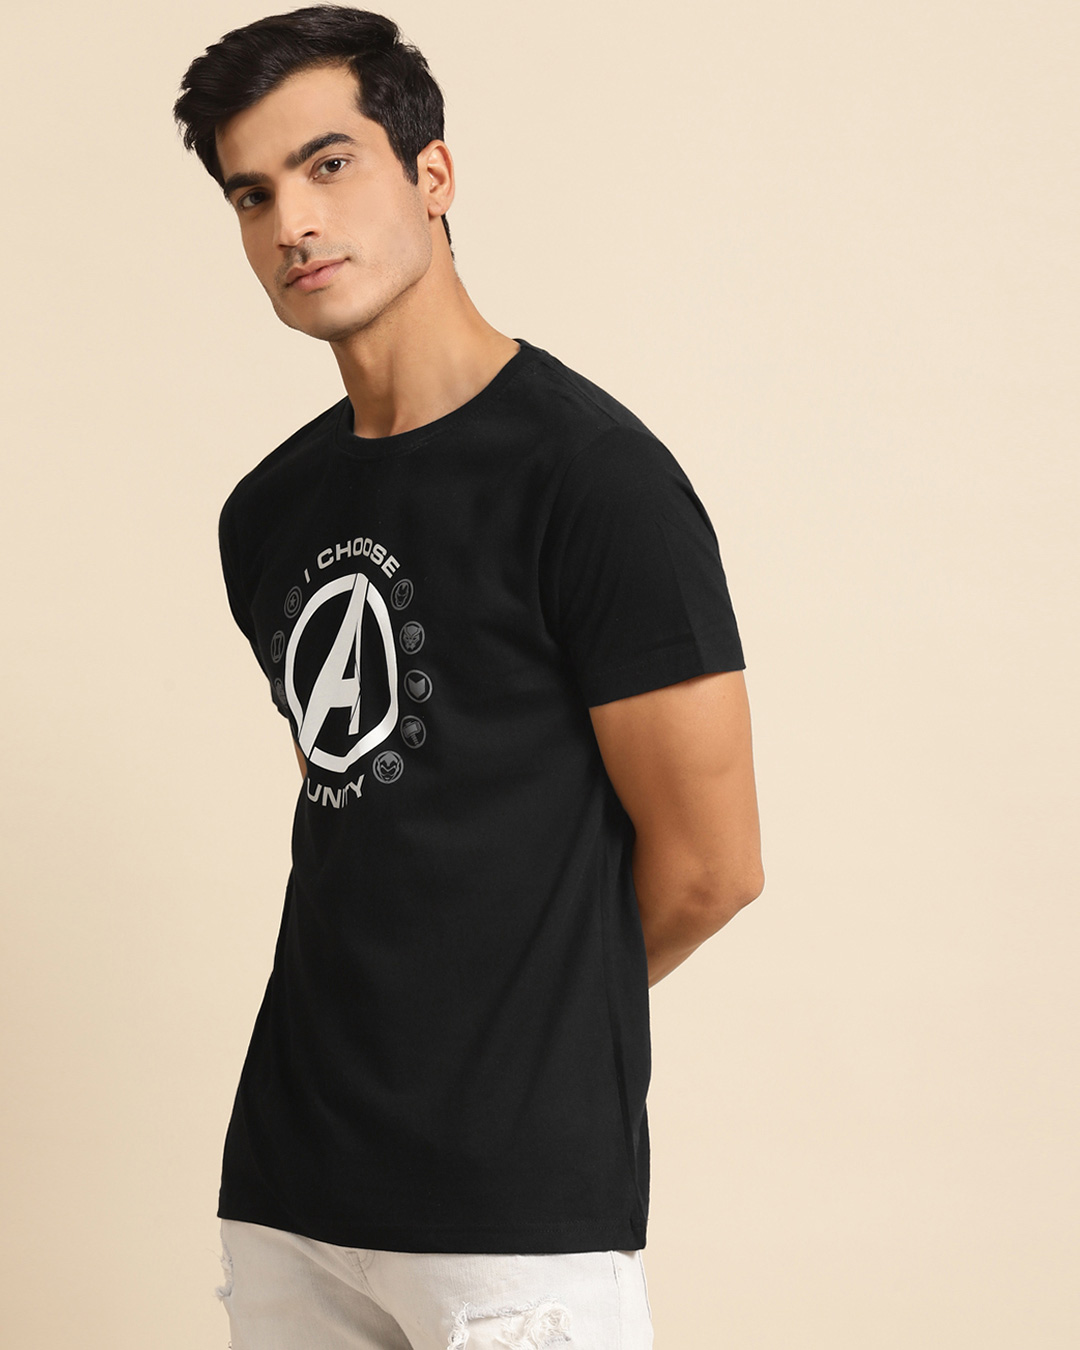 Shop I Choose Unity Half Sleeve T-Shirt (AVL) Black-Back